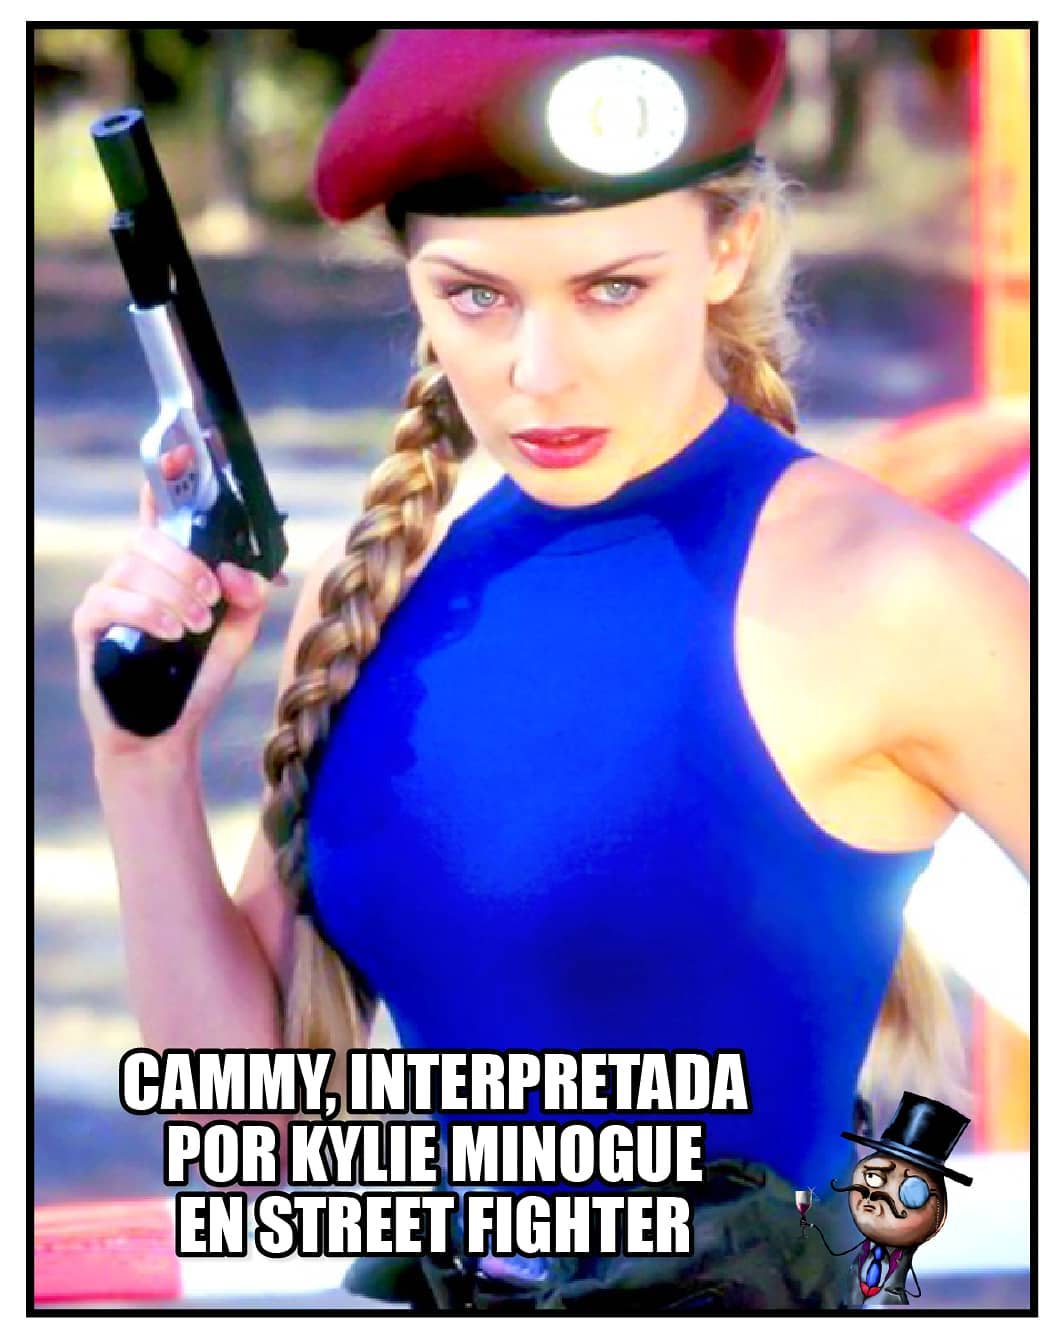 Cammy, interpretada por Kylie Minogue en Street fighter.